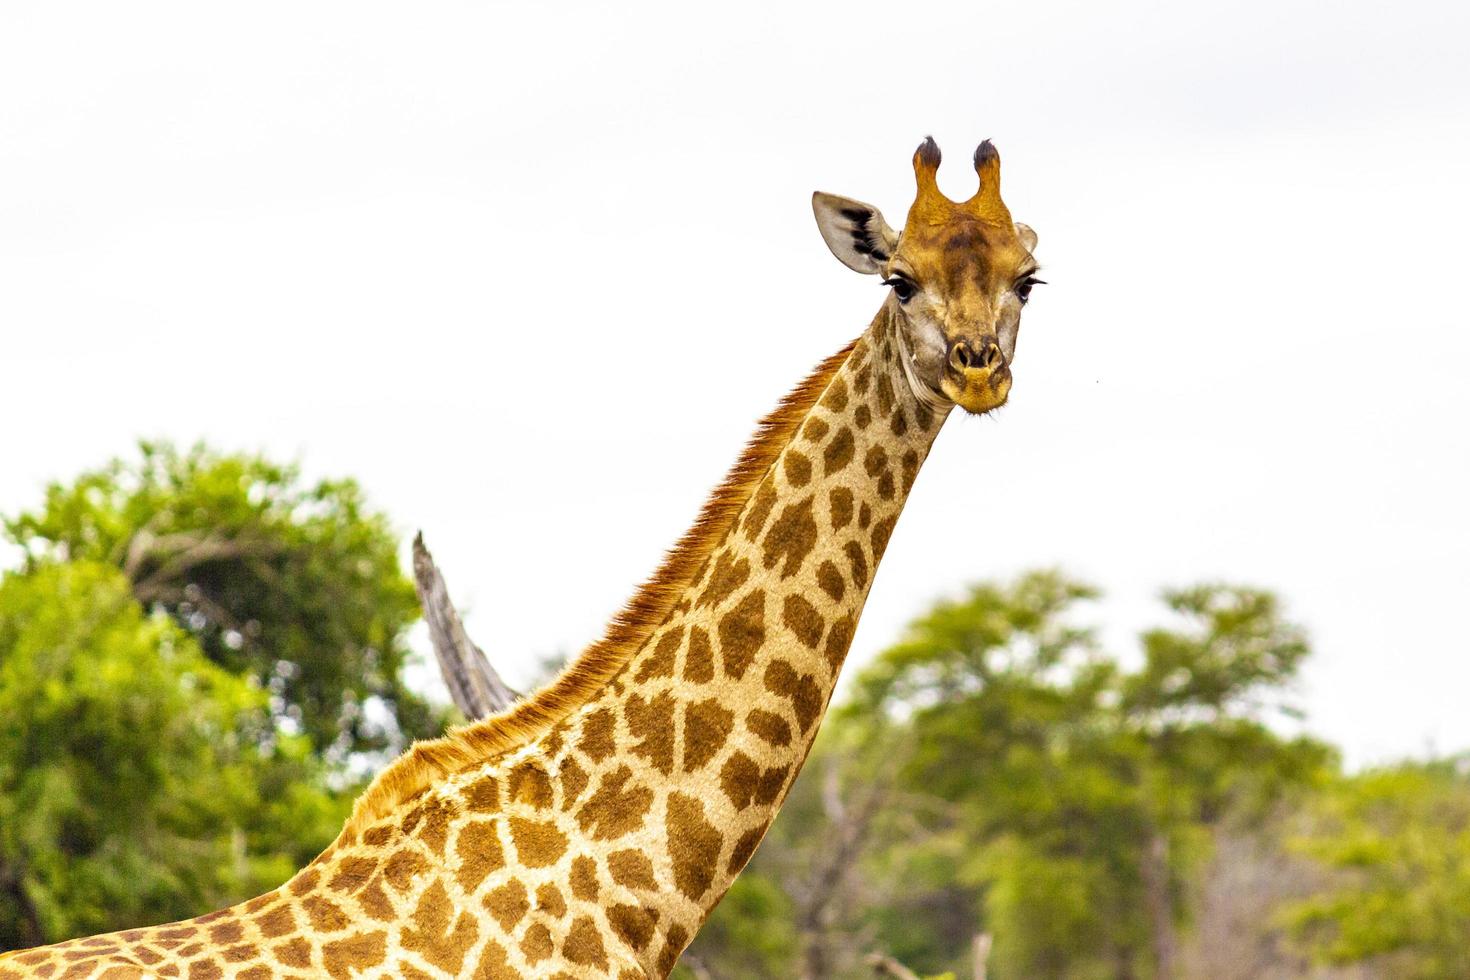 bela alta majestosa girafa kruger parque nacional safari áfrica do sul. foto